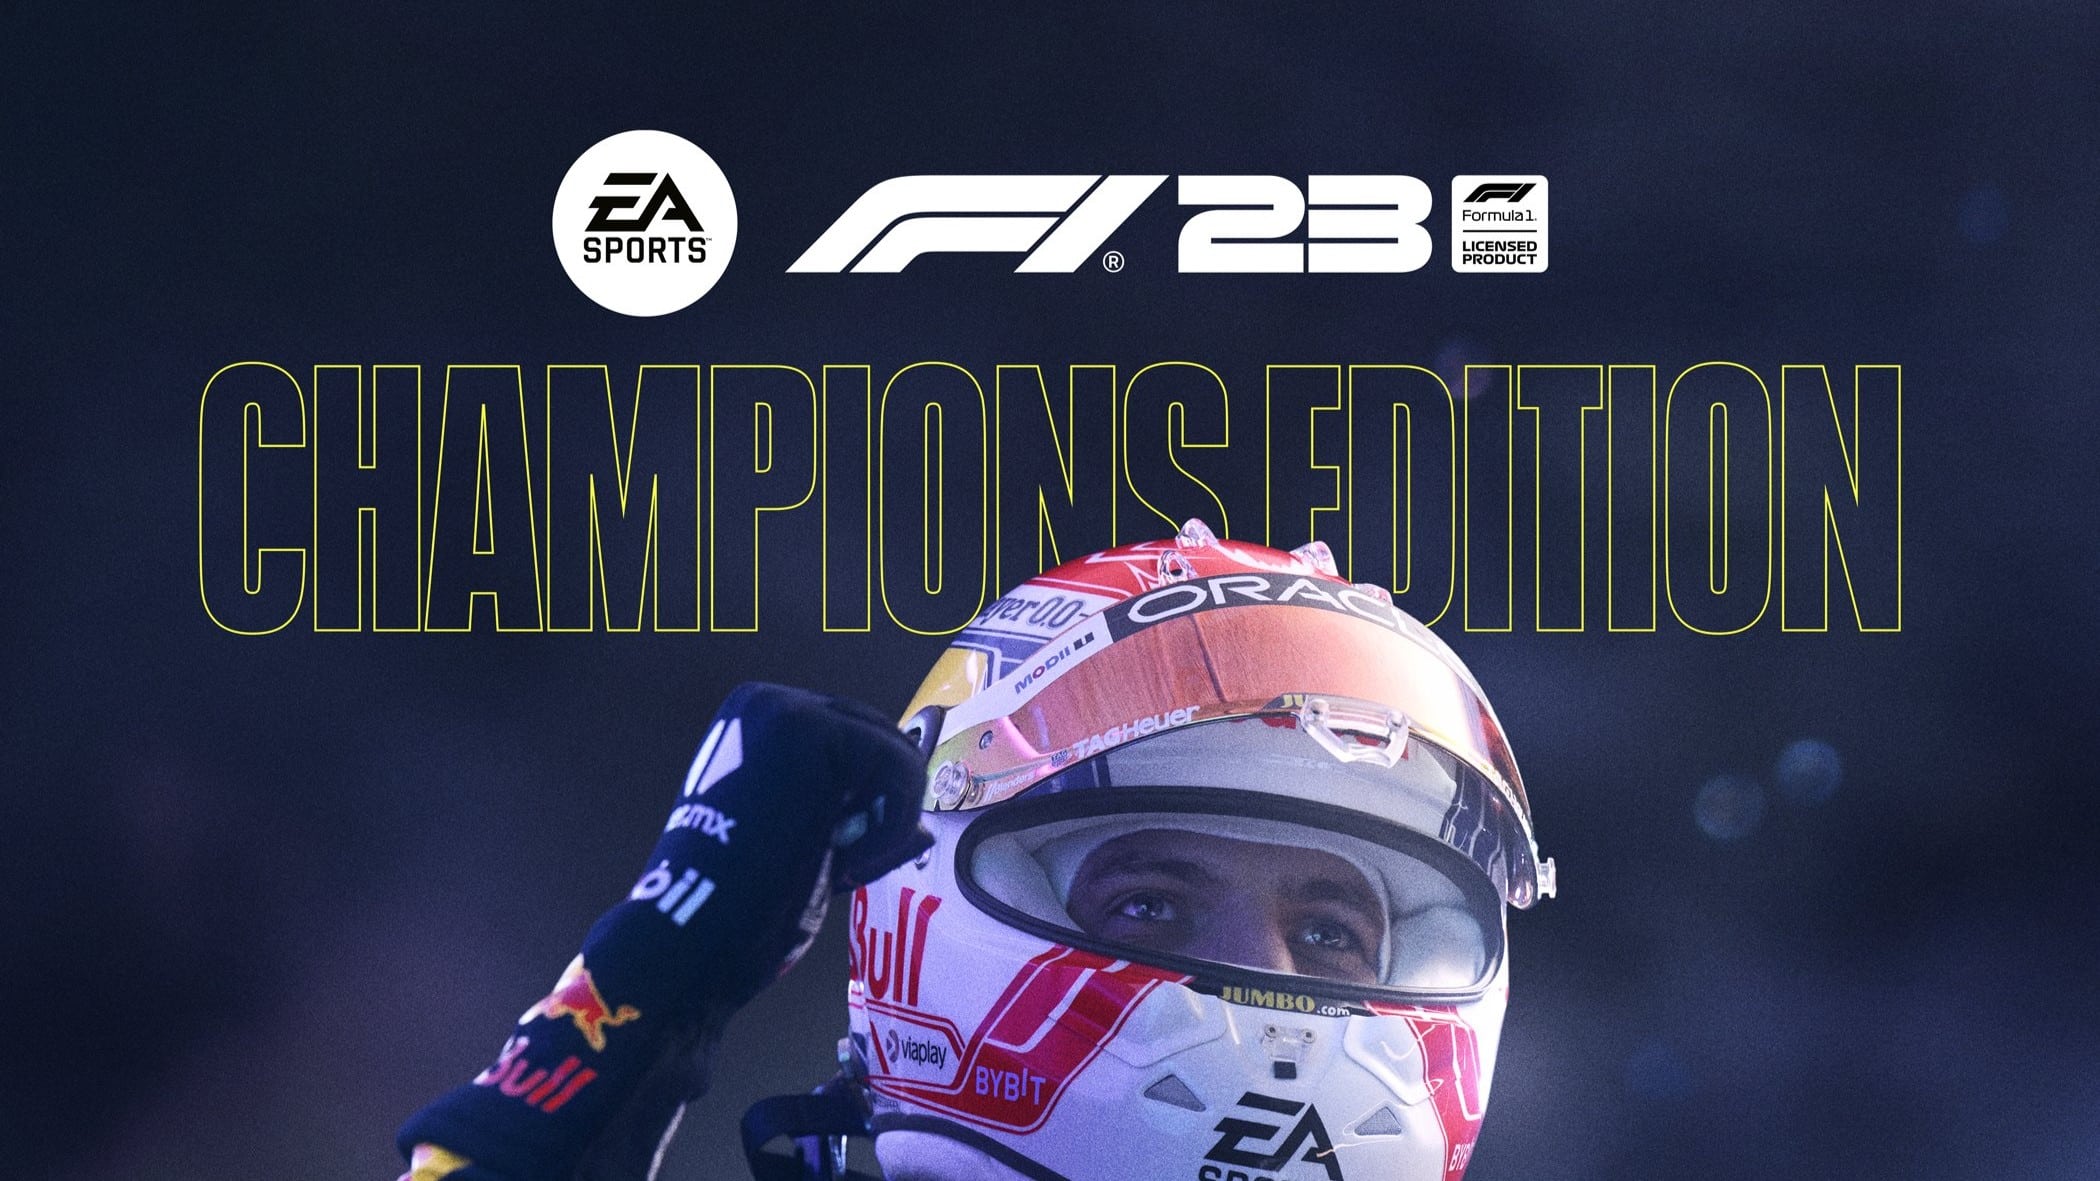 f1 23 champions edition cover